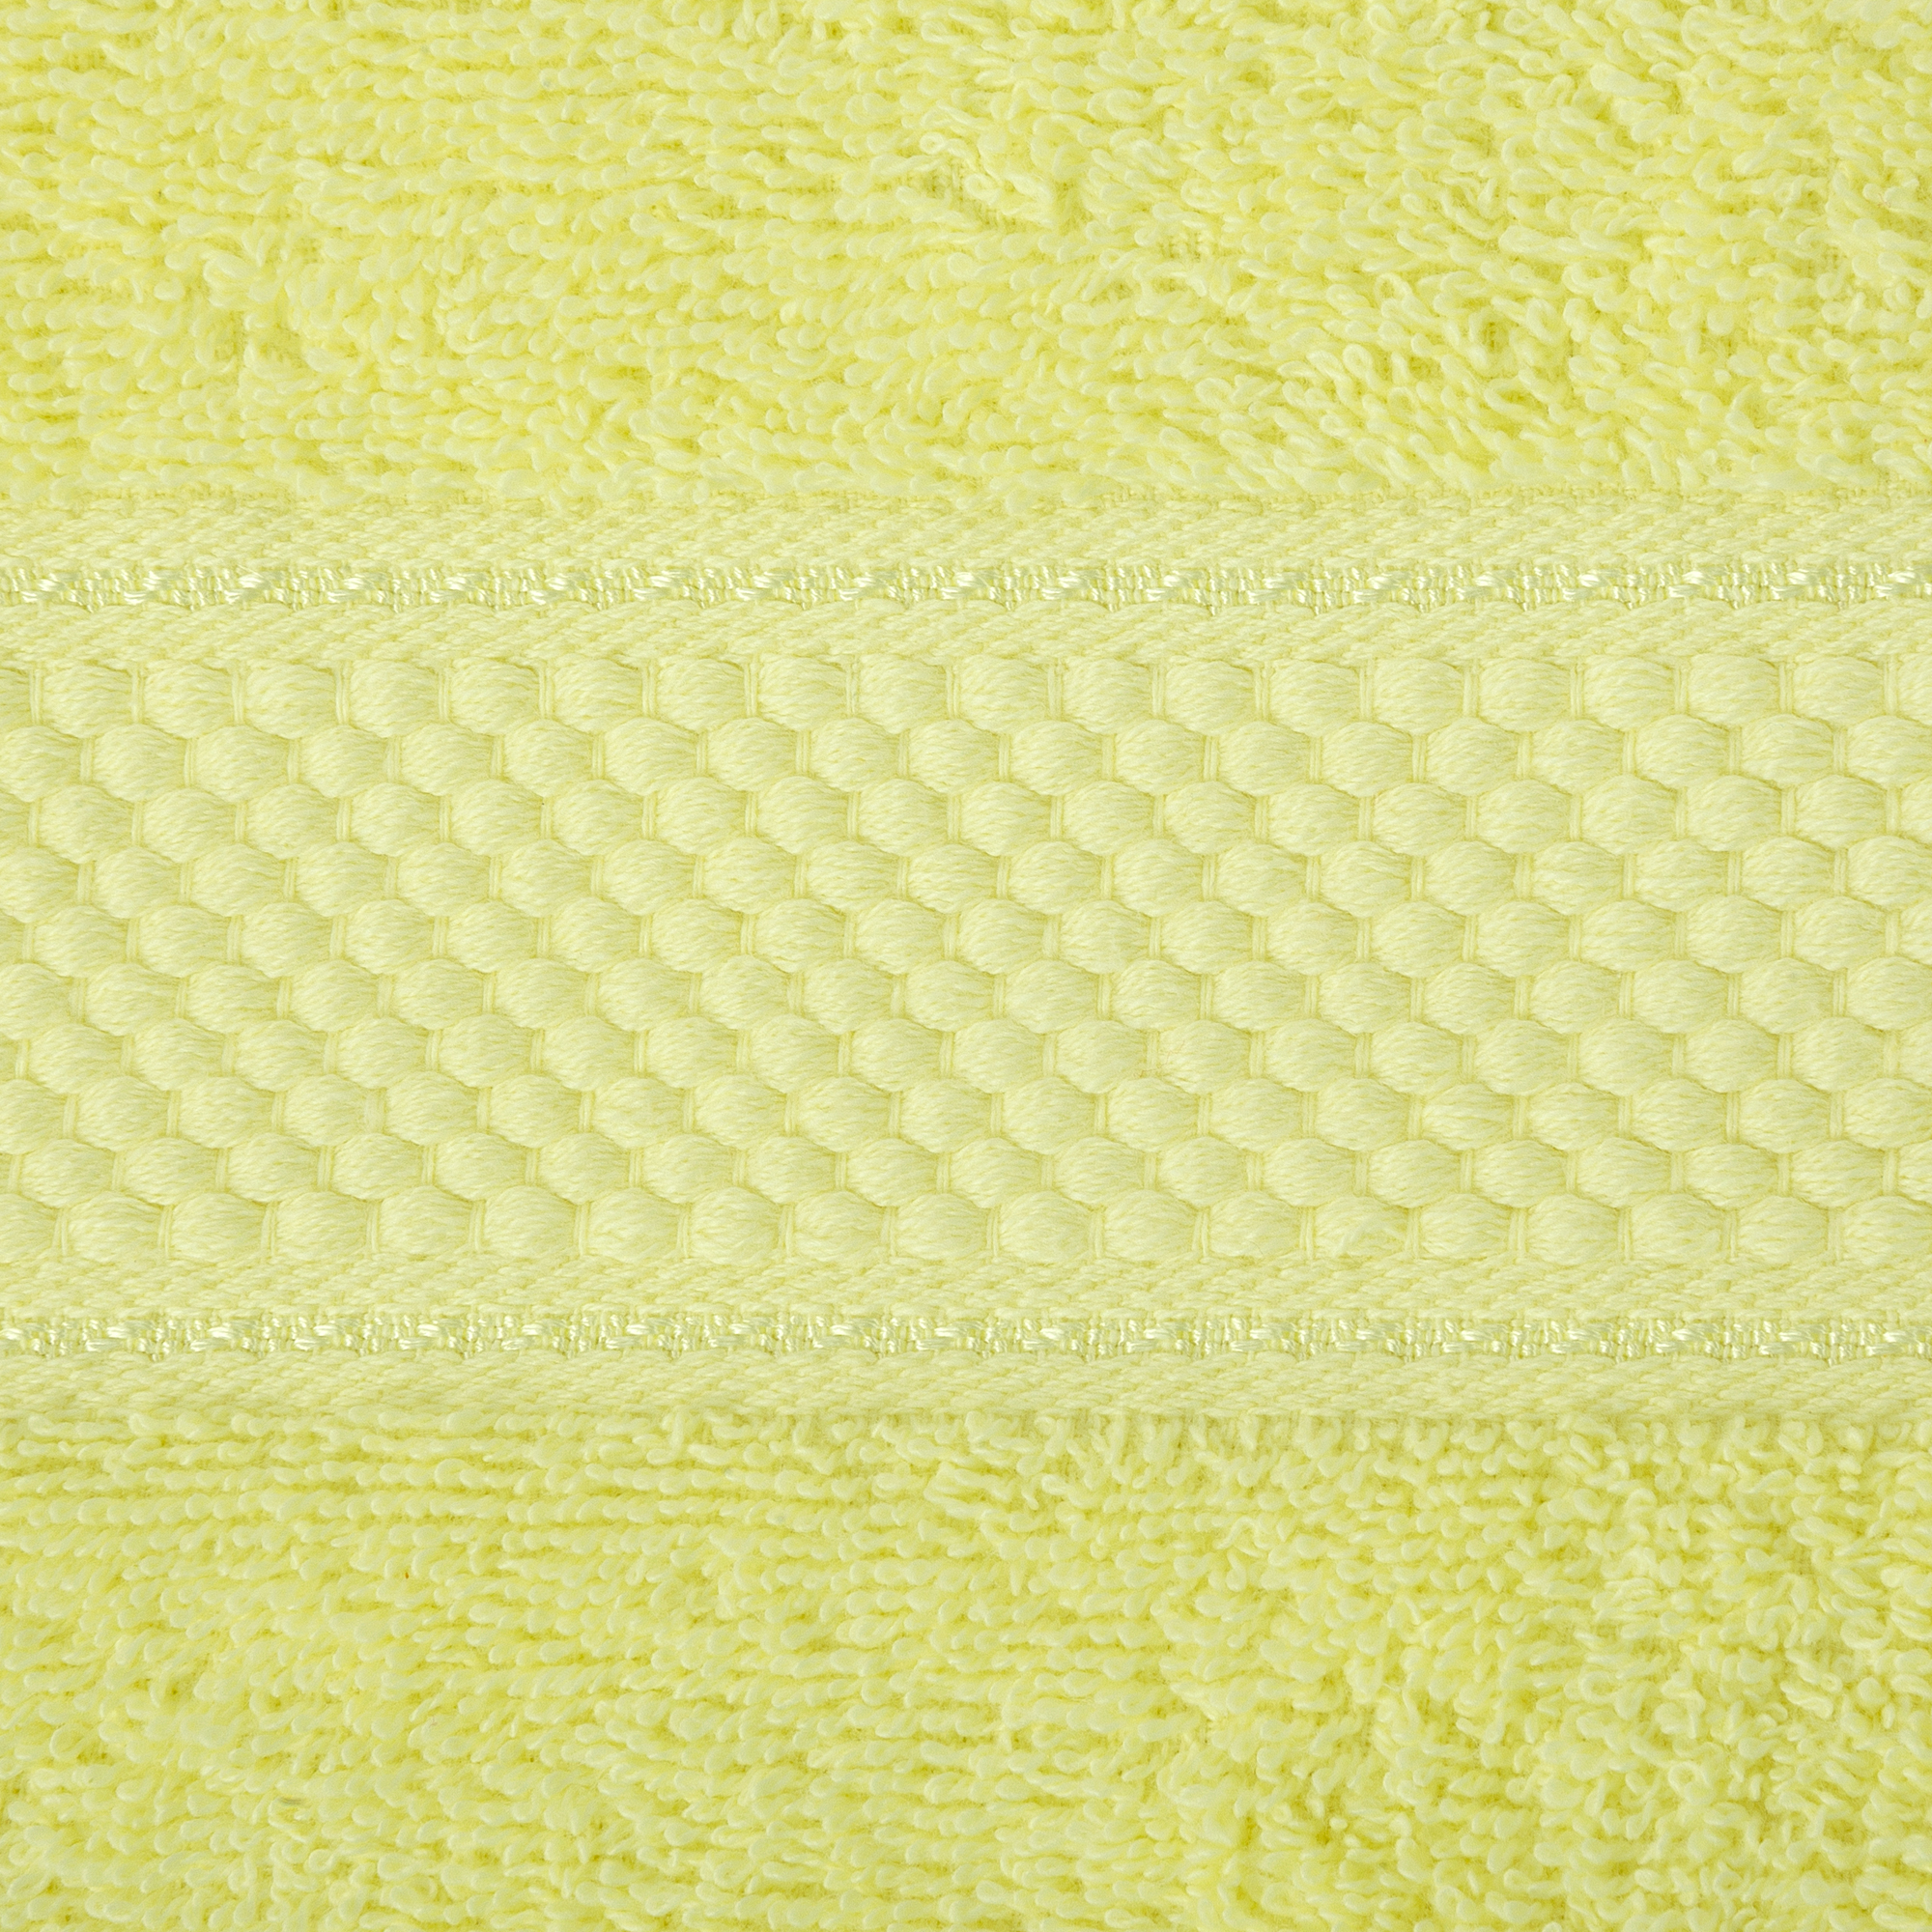 Bale Set 2pcs Lemon Plain Bath Sheet Towel